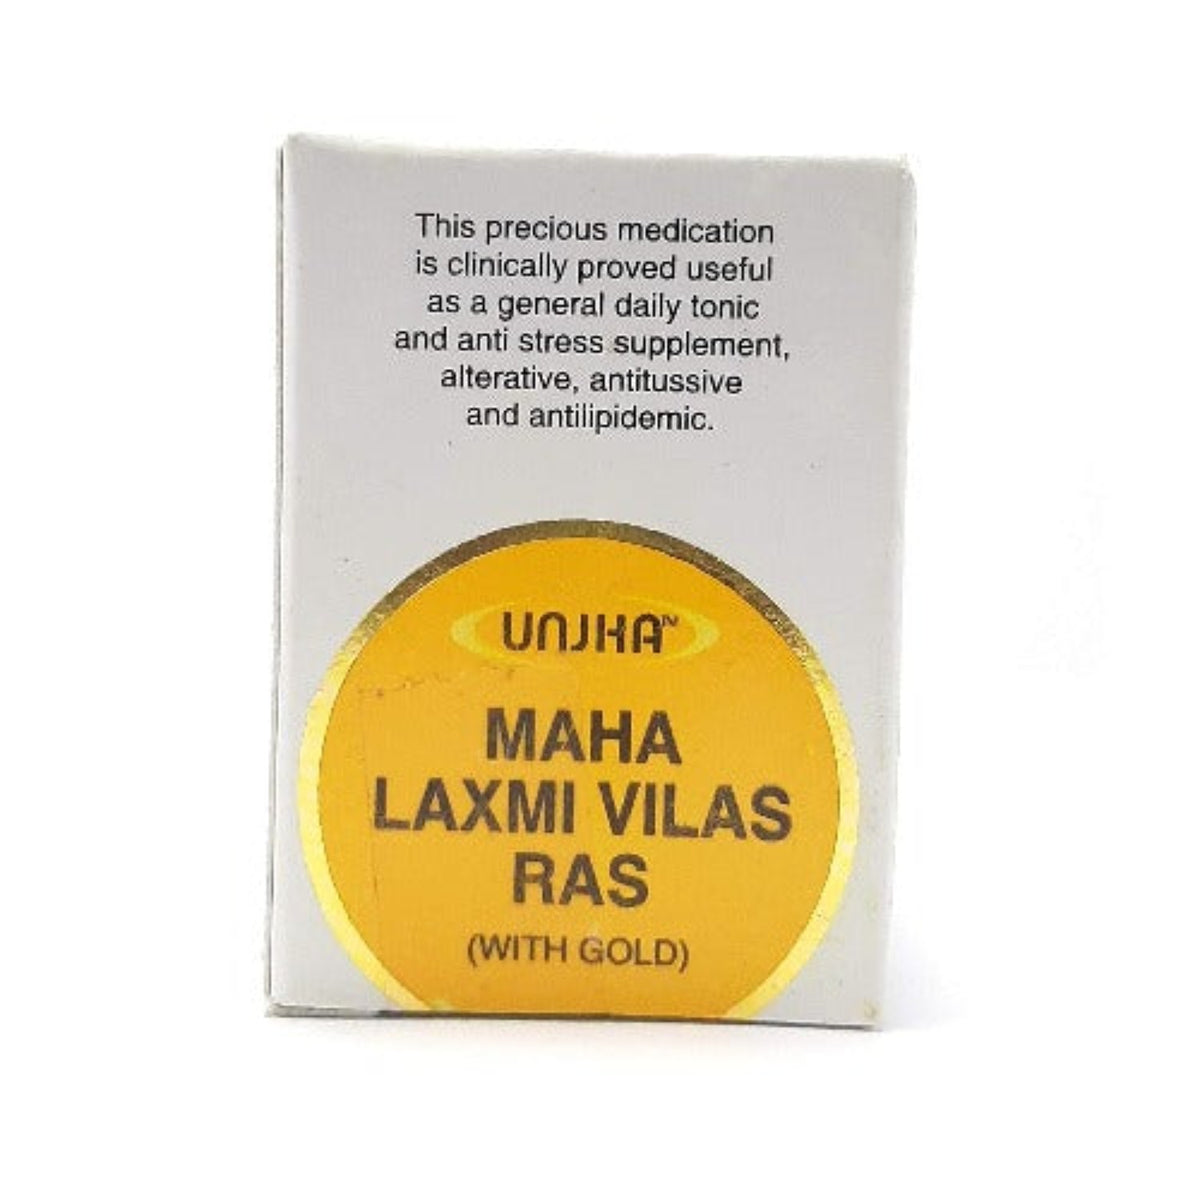 Unjha Ayurvedic Maha Laxmi Vilas Ras Stress Relief Tablets